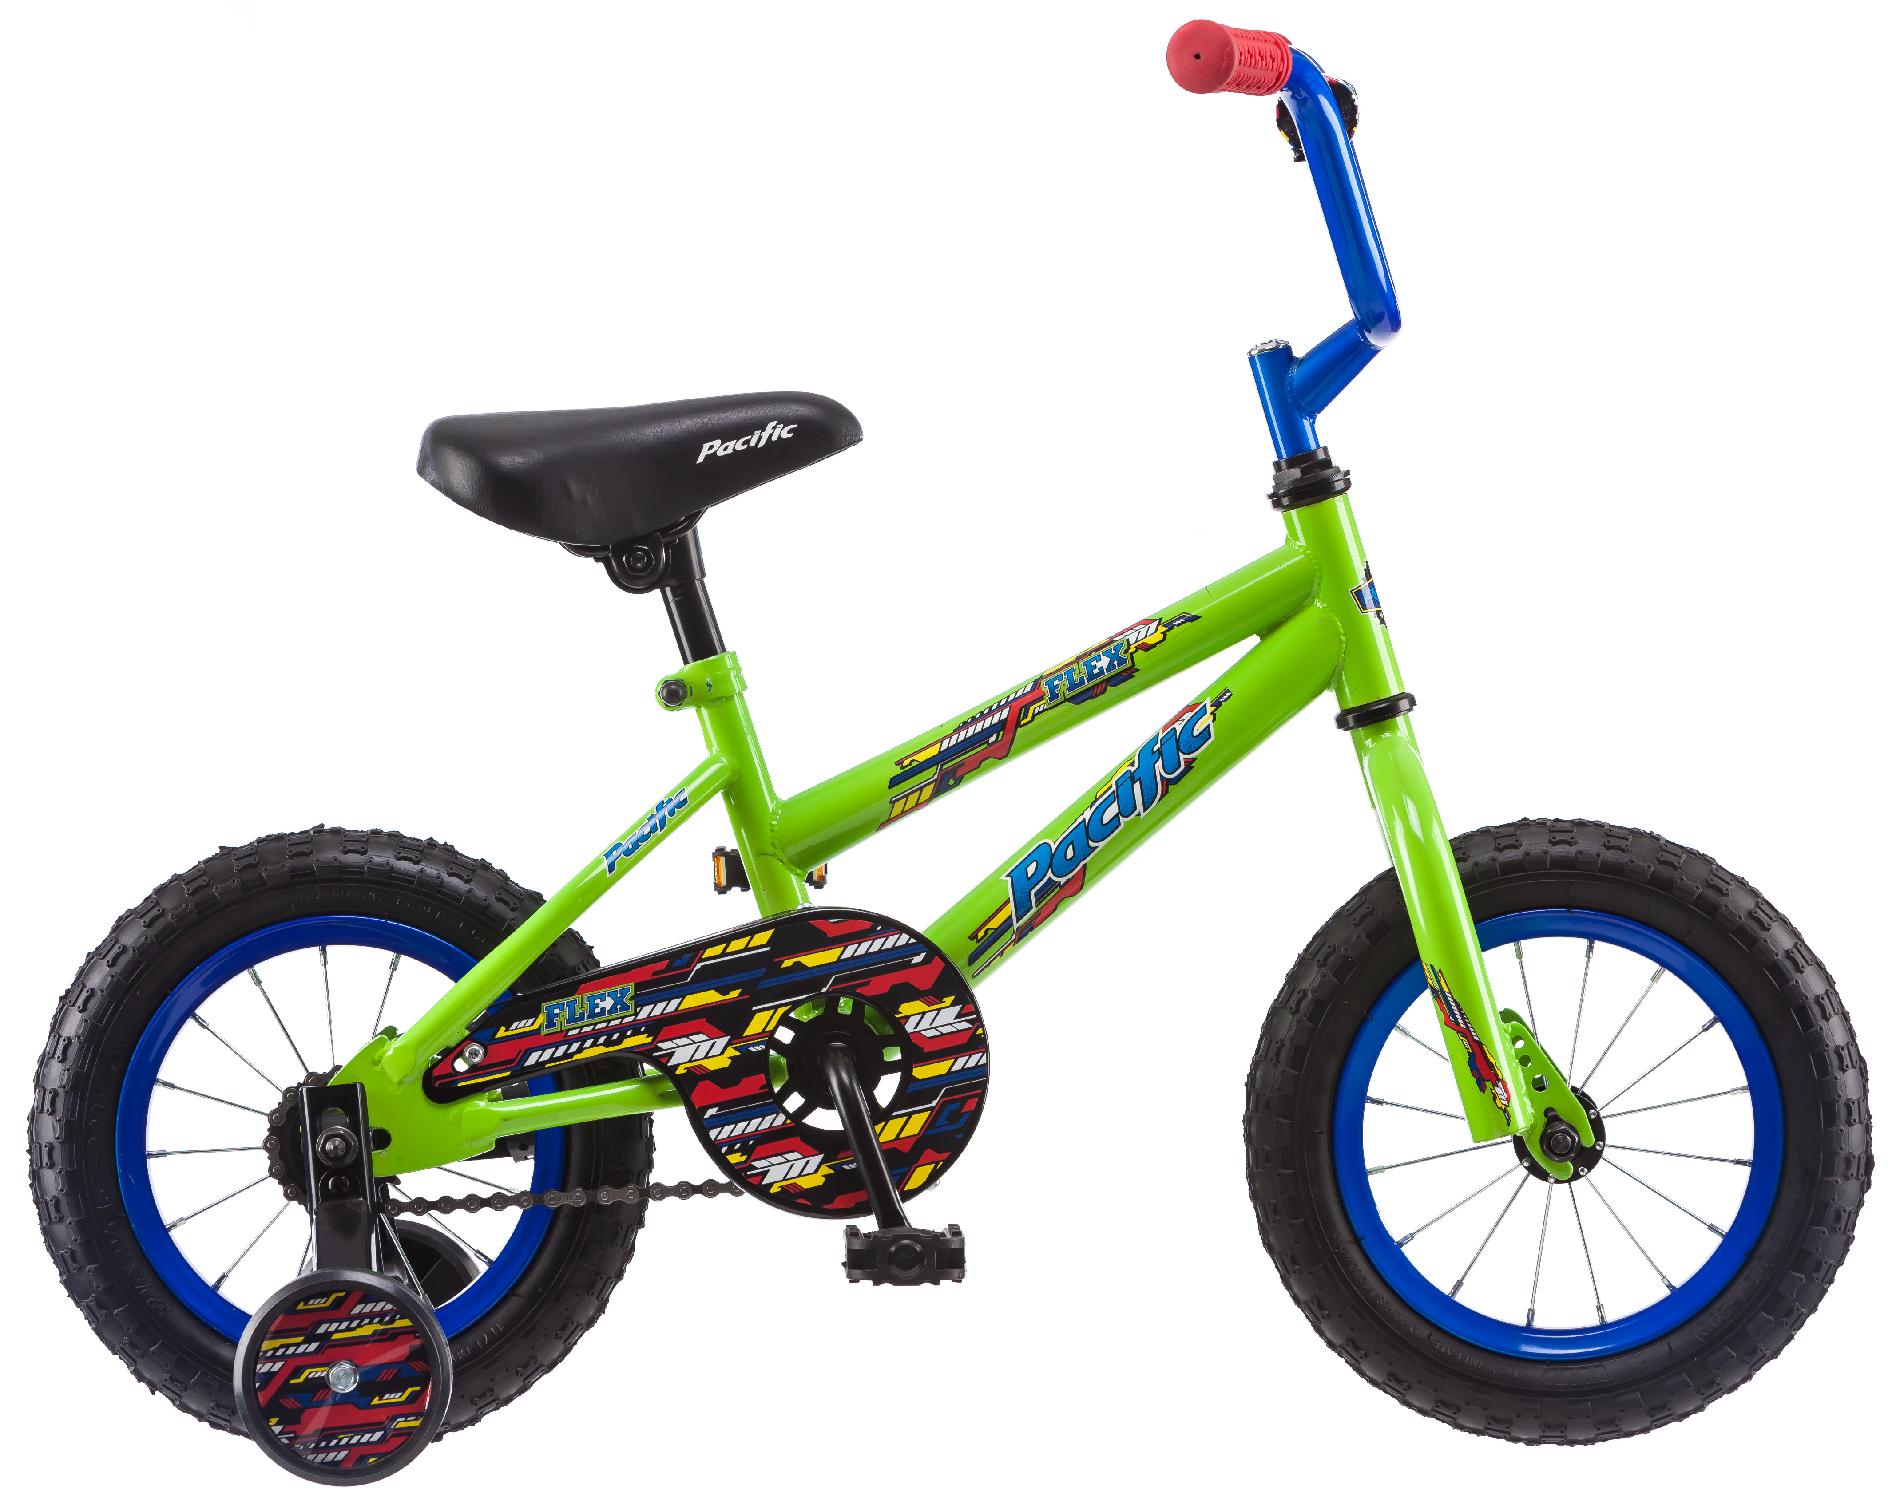 UPC 038675403406 product image for Pacific 12 Boy s Flex Bike | upcitemdb.com